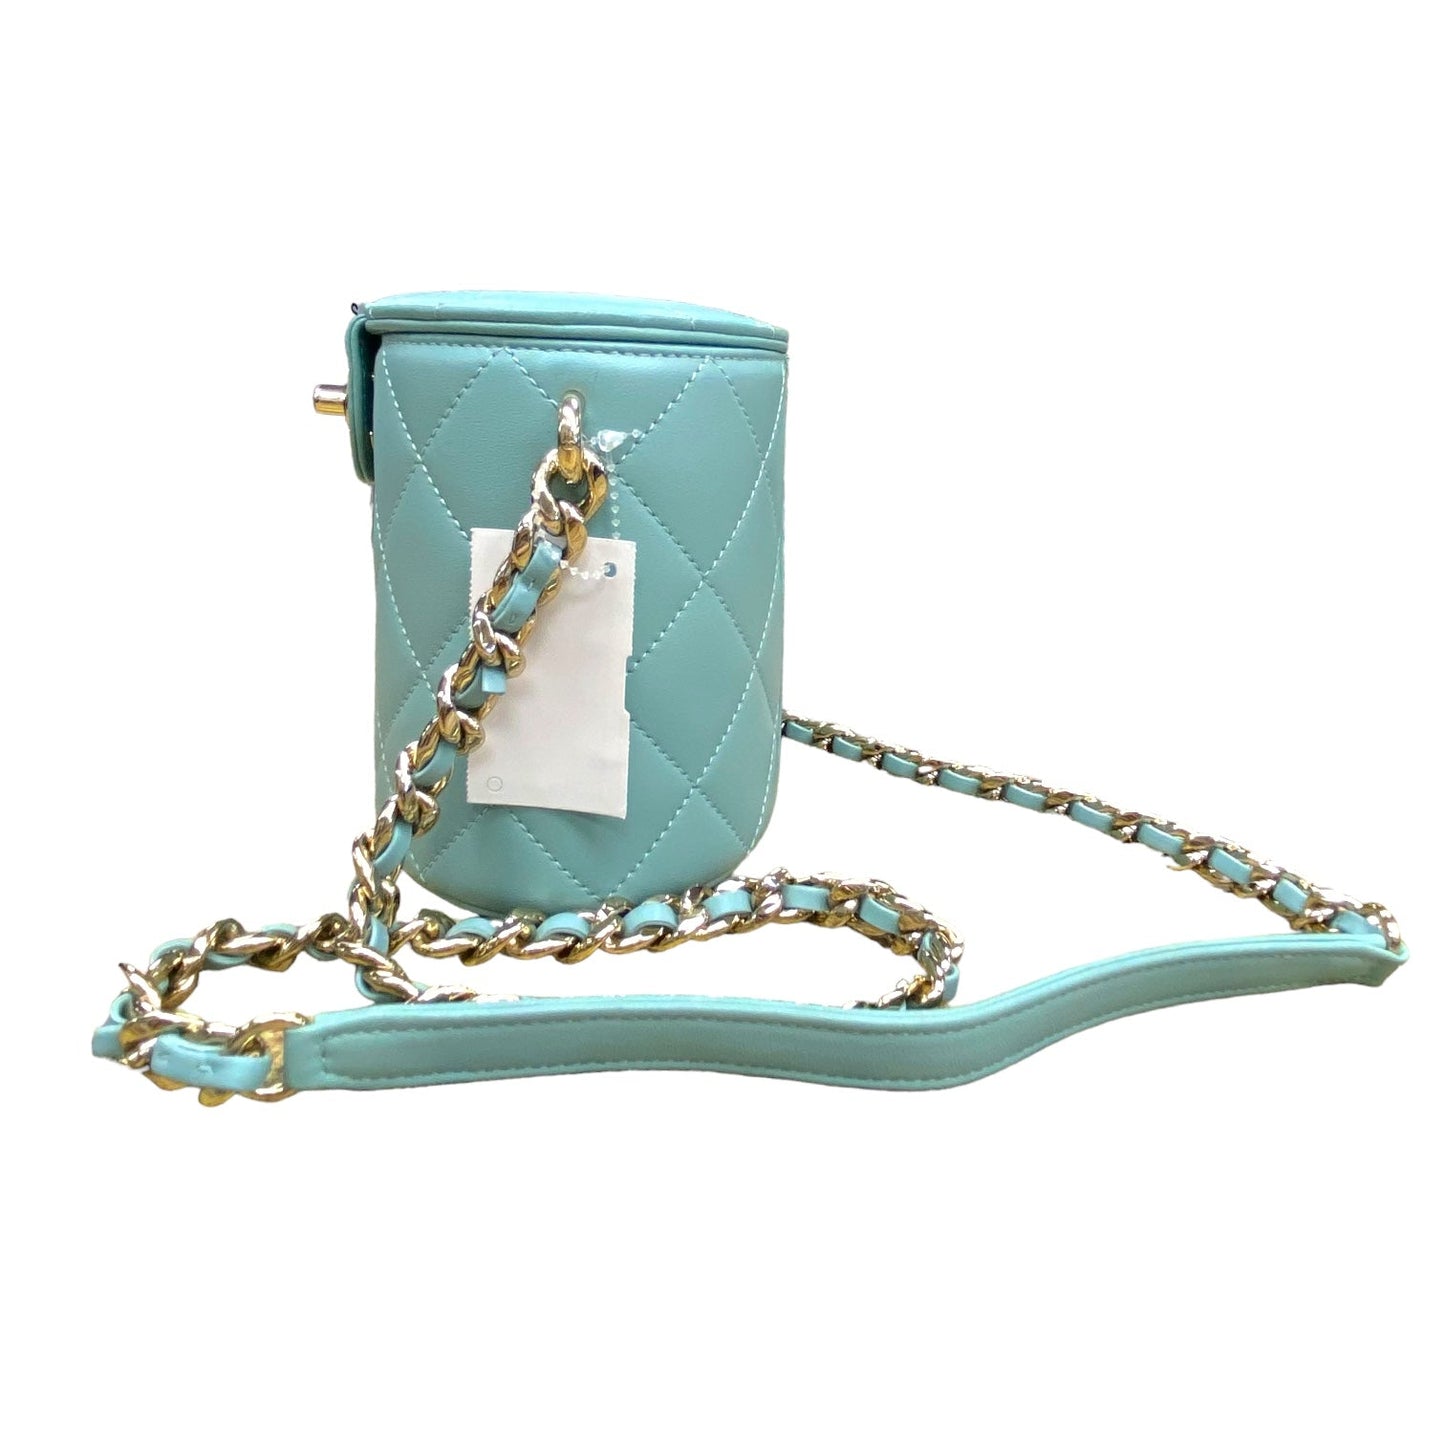 Handbag Luxury Designer By Chanel  Size: Small